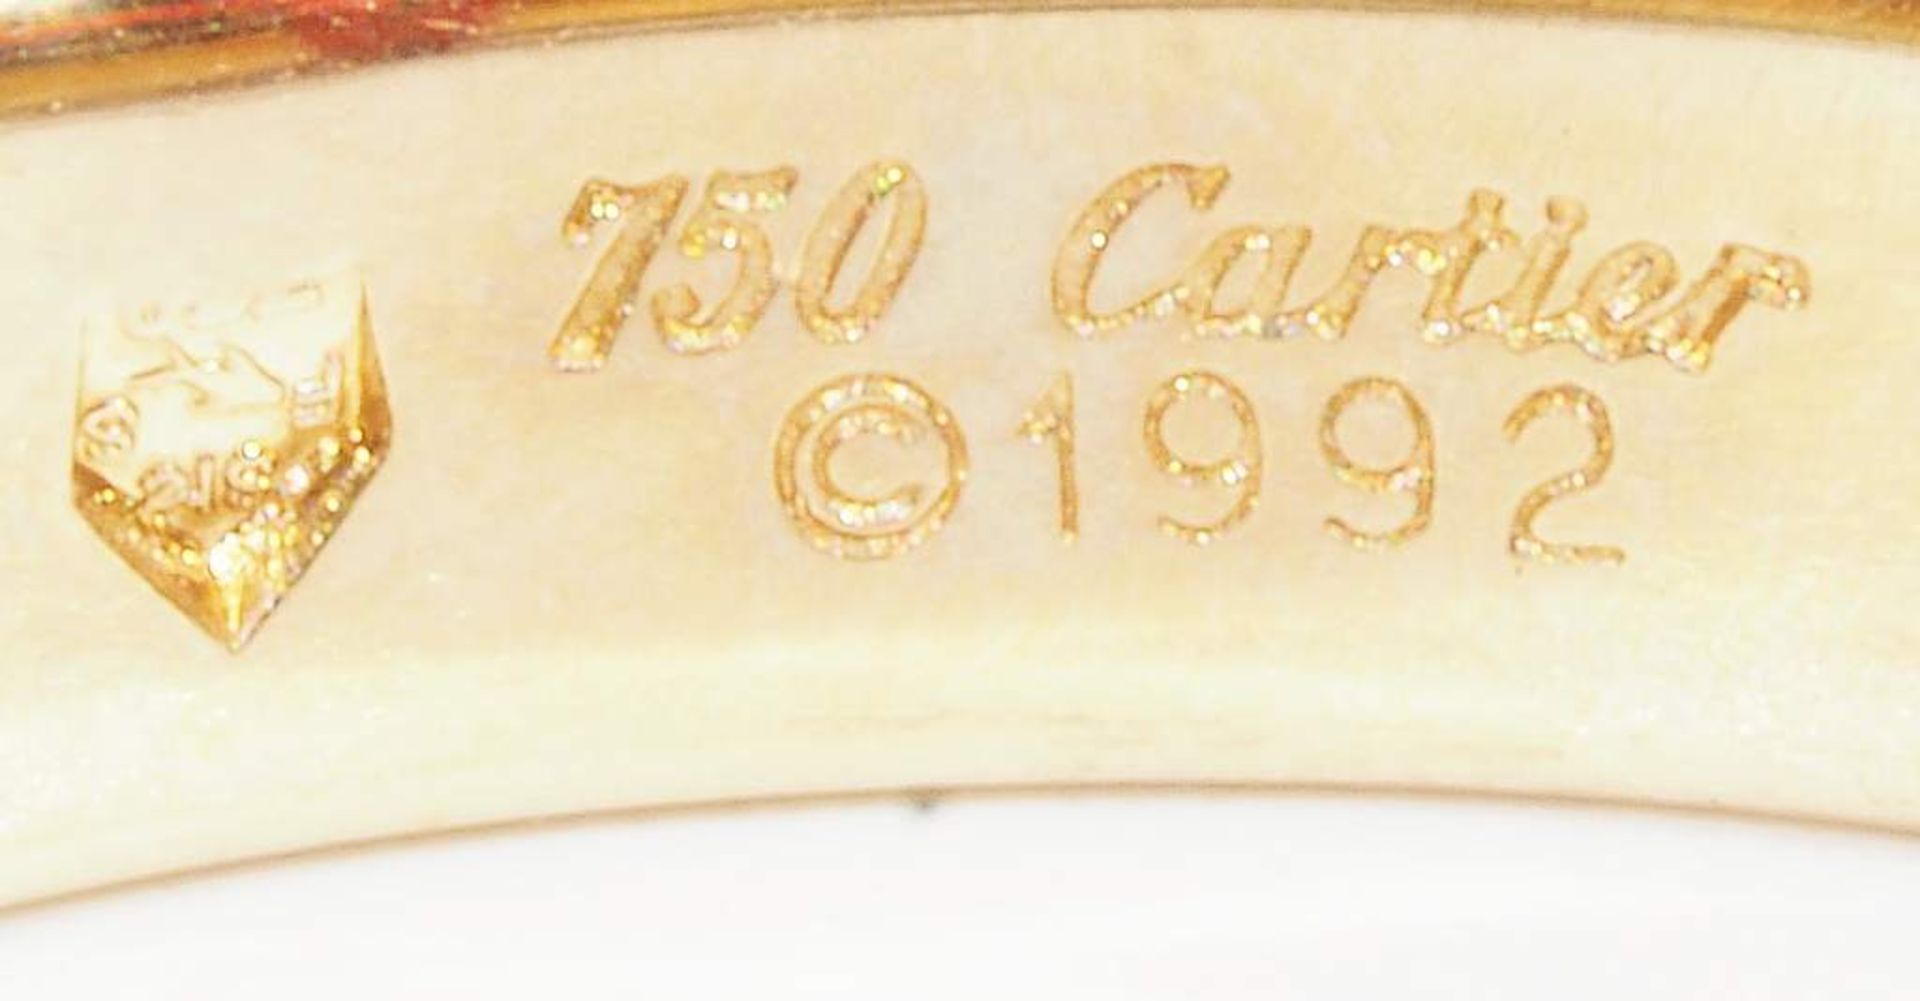 Memoire-Ring, CARTIER Paris. Ringschiene besetzt mit fünf Smaragden, gepunzt: 750 - Cartier - 1992 - Image 5 of 6